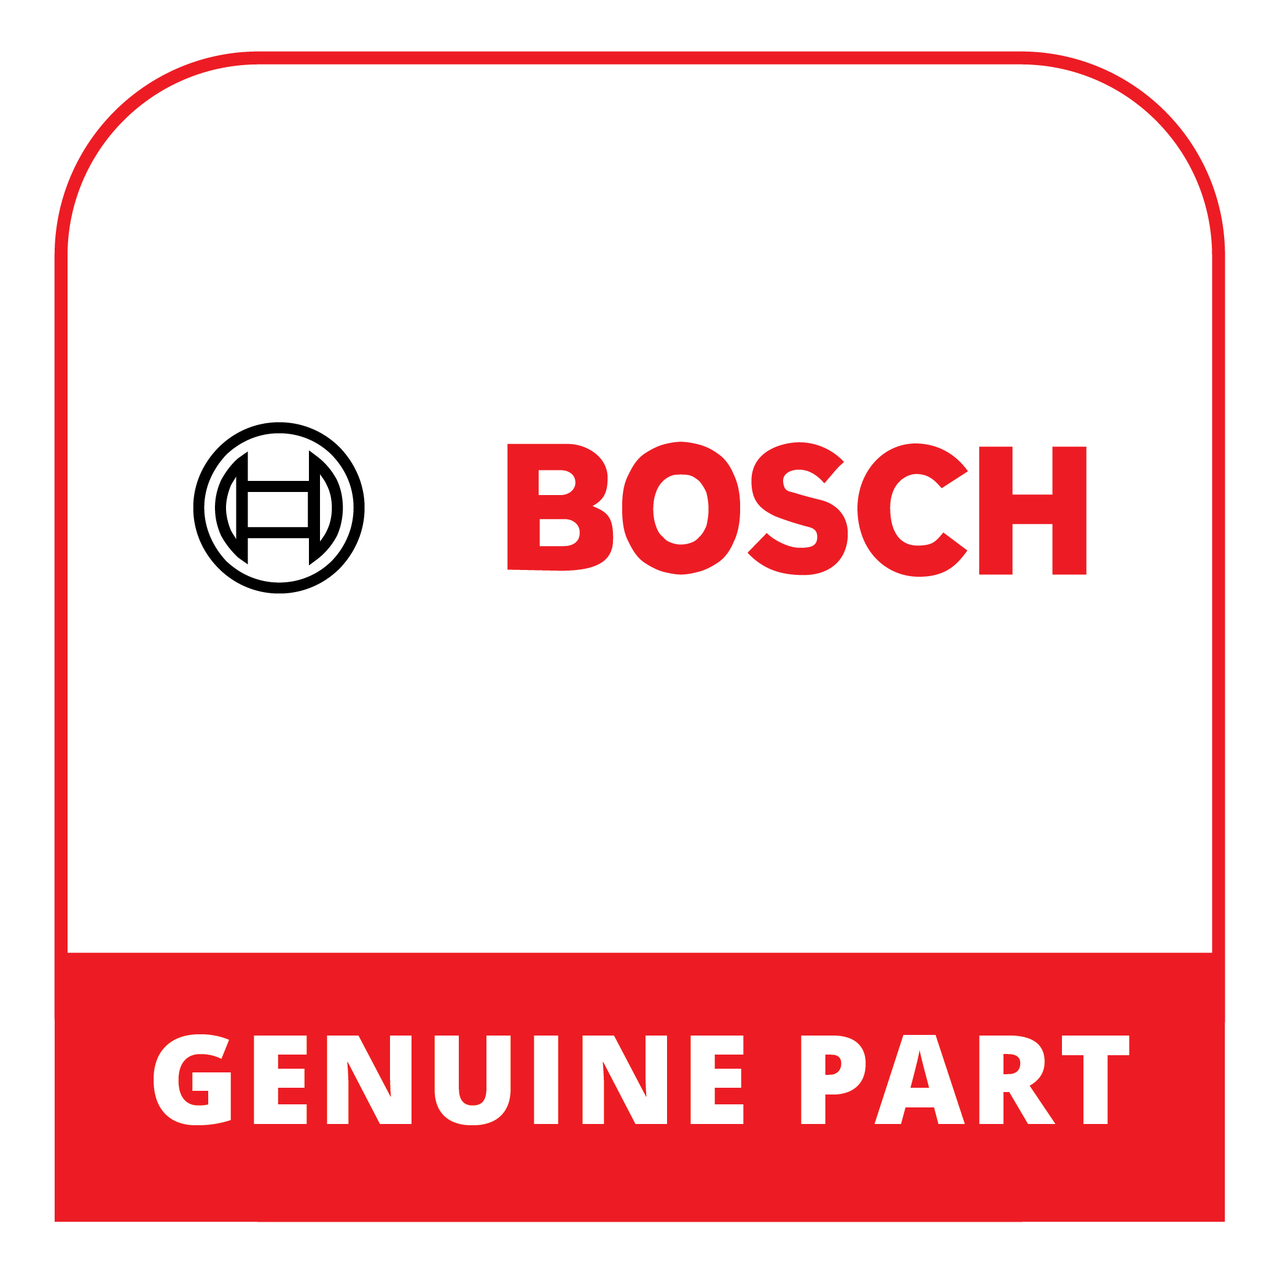 Bosch (Thermador) 10010308 - Screw - Genuine Bosch (Thermador) Part